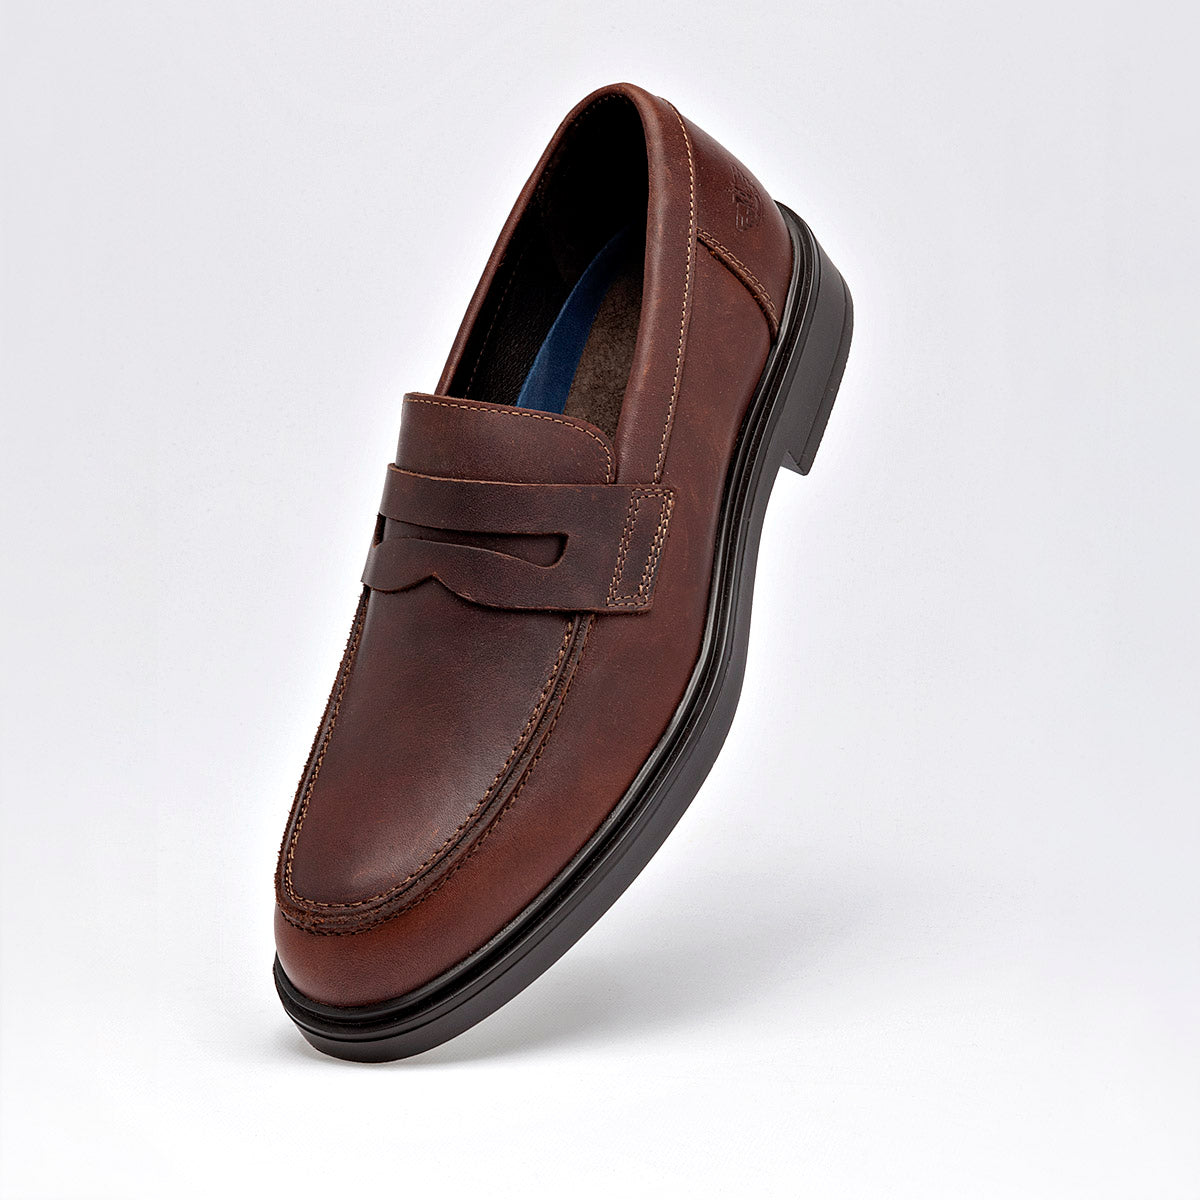 Pakar.com - Mayo: Regalos para mamá | Zapato casual para hombre cod-126053